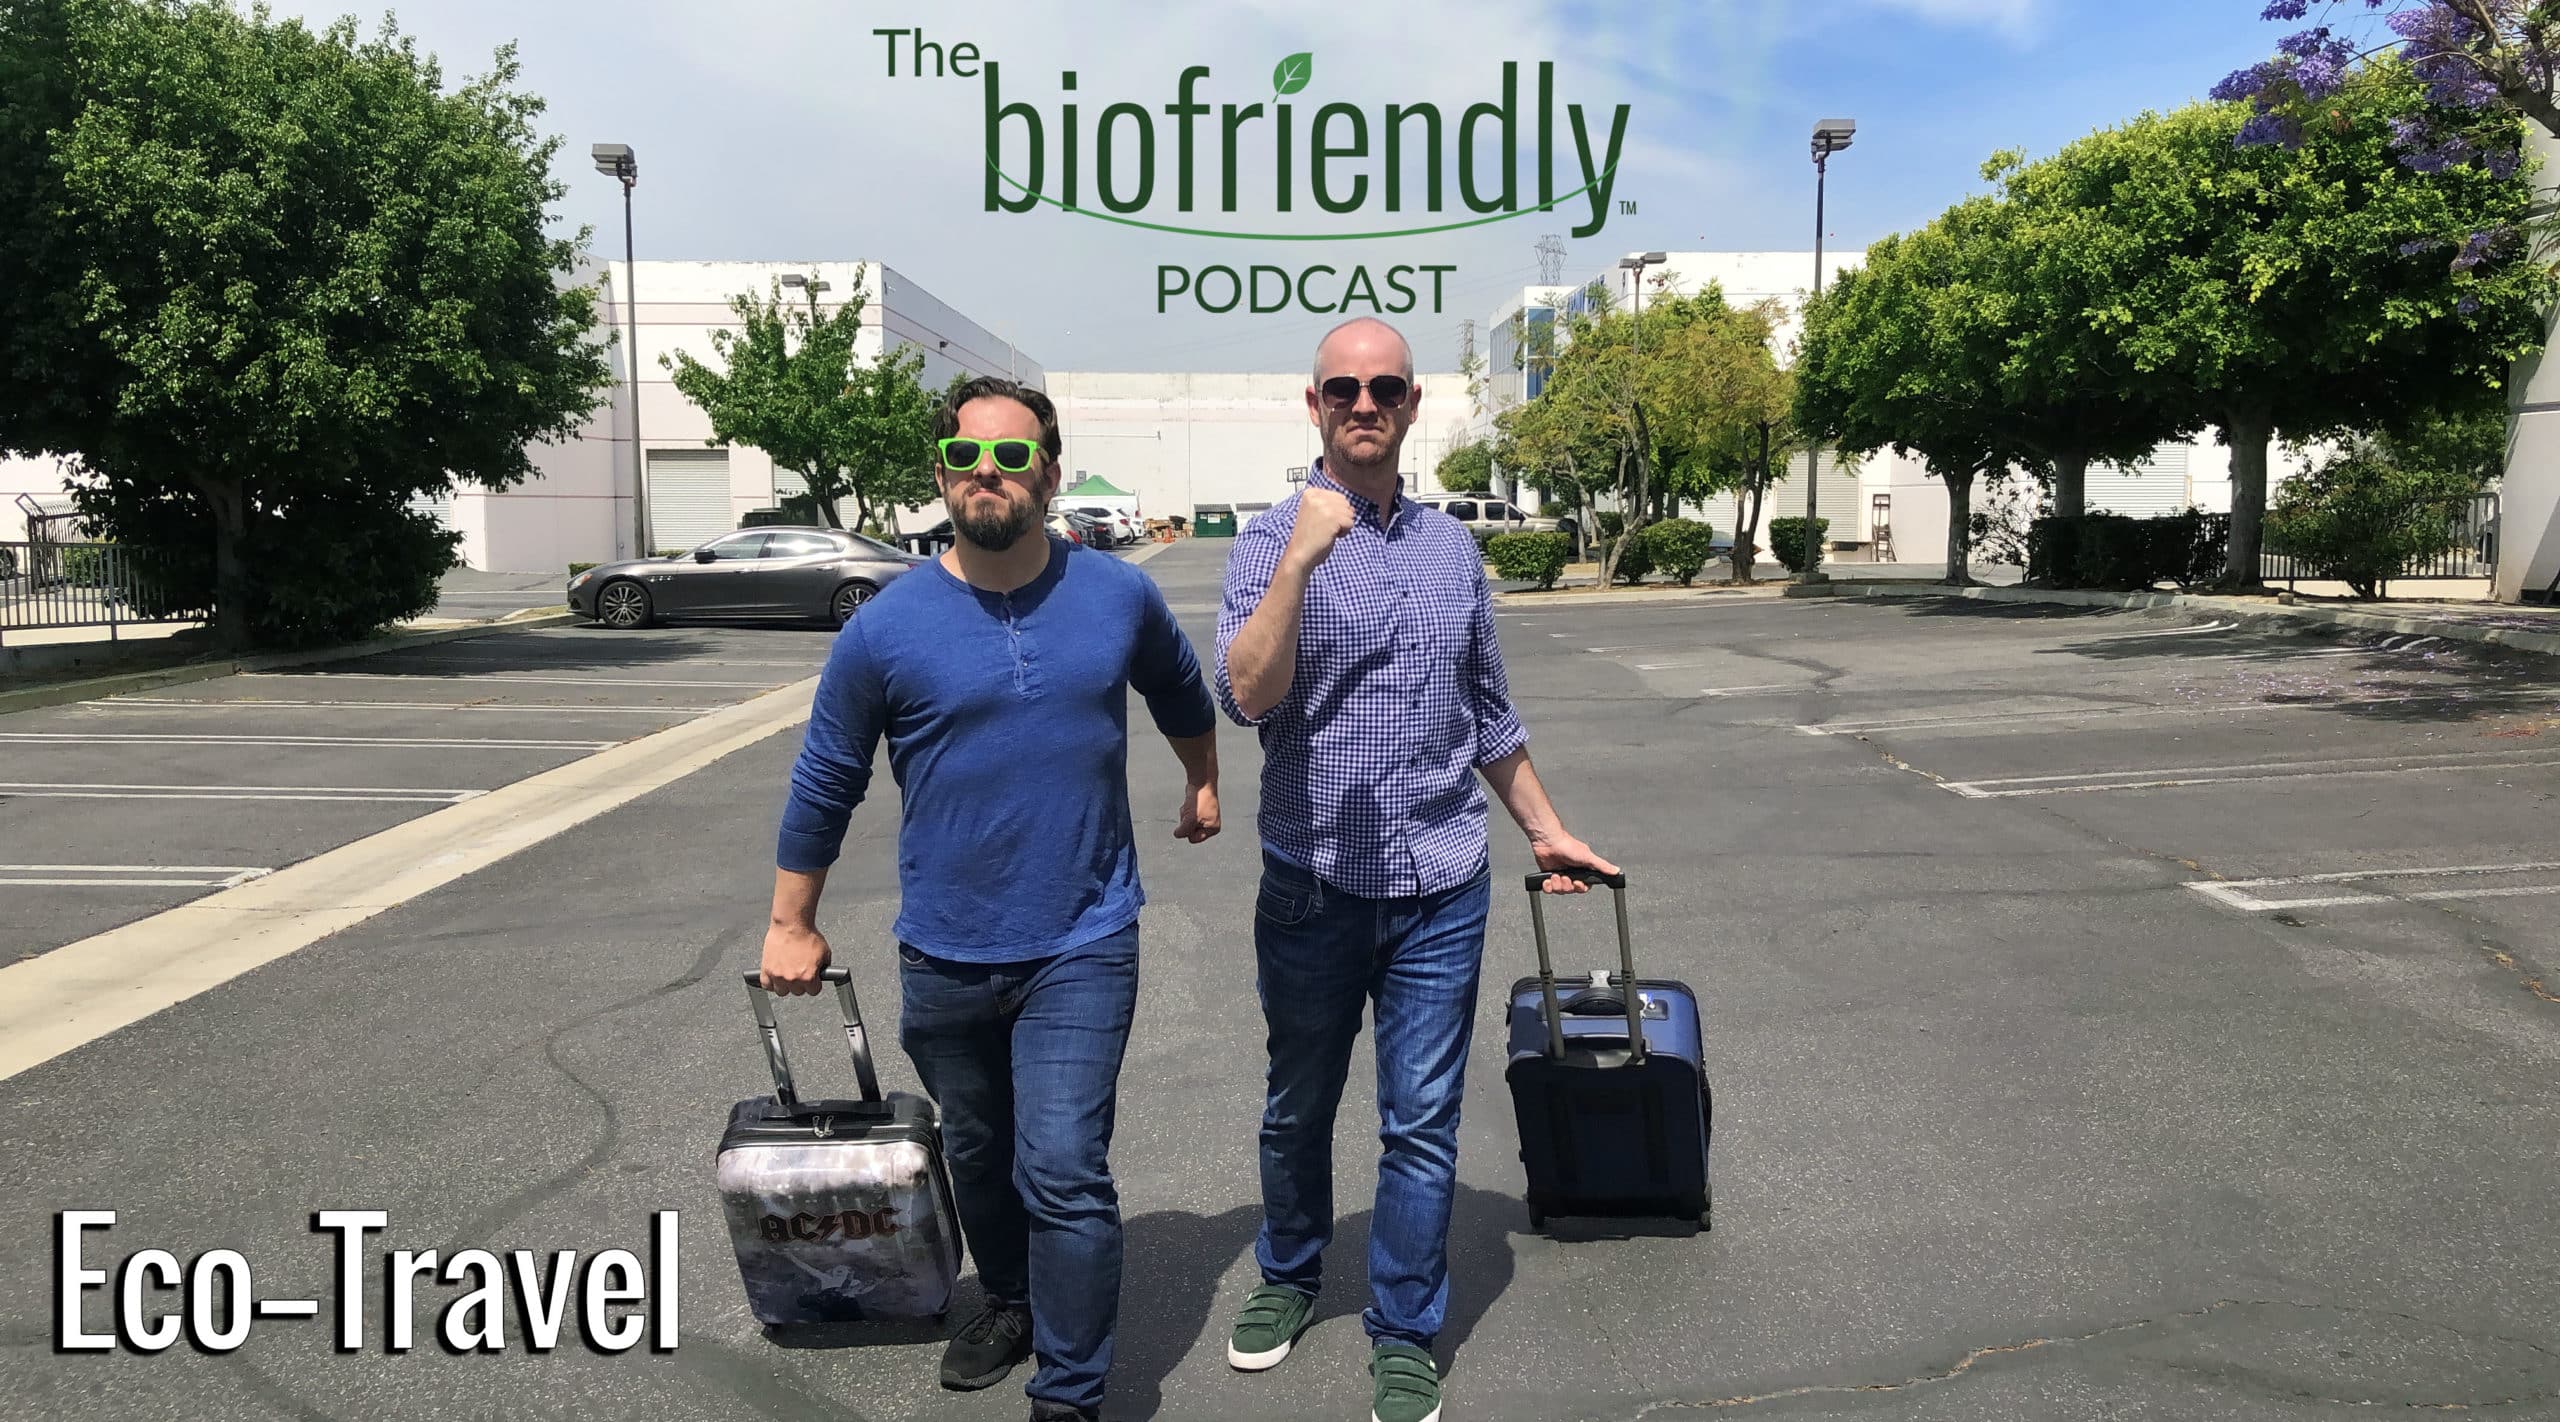 The Biofriendly Podcast - Episode 18 - Eco-Travel